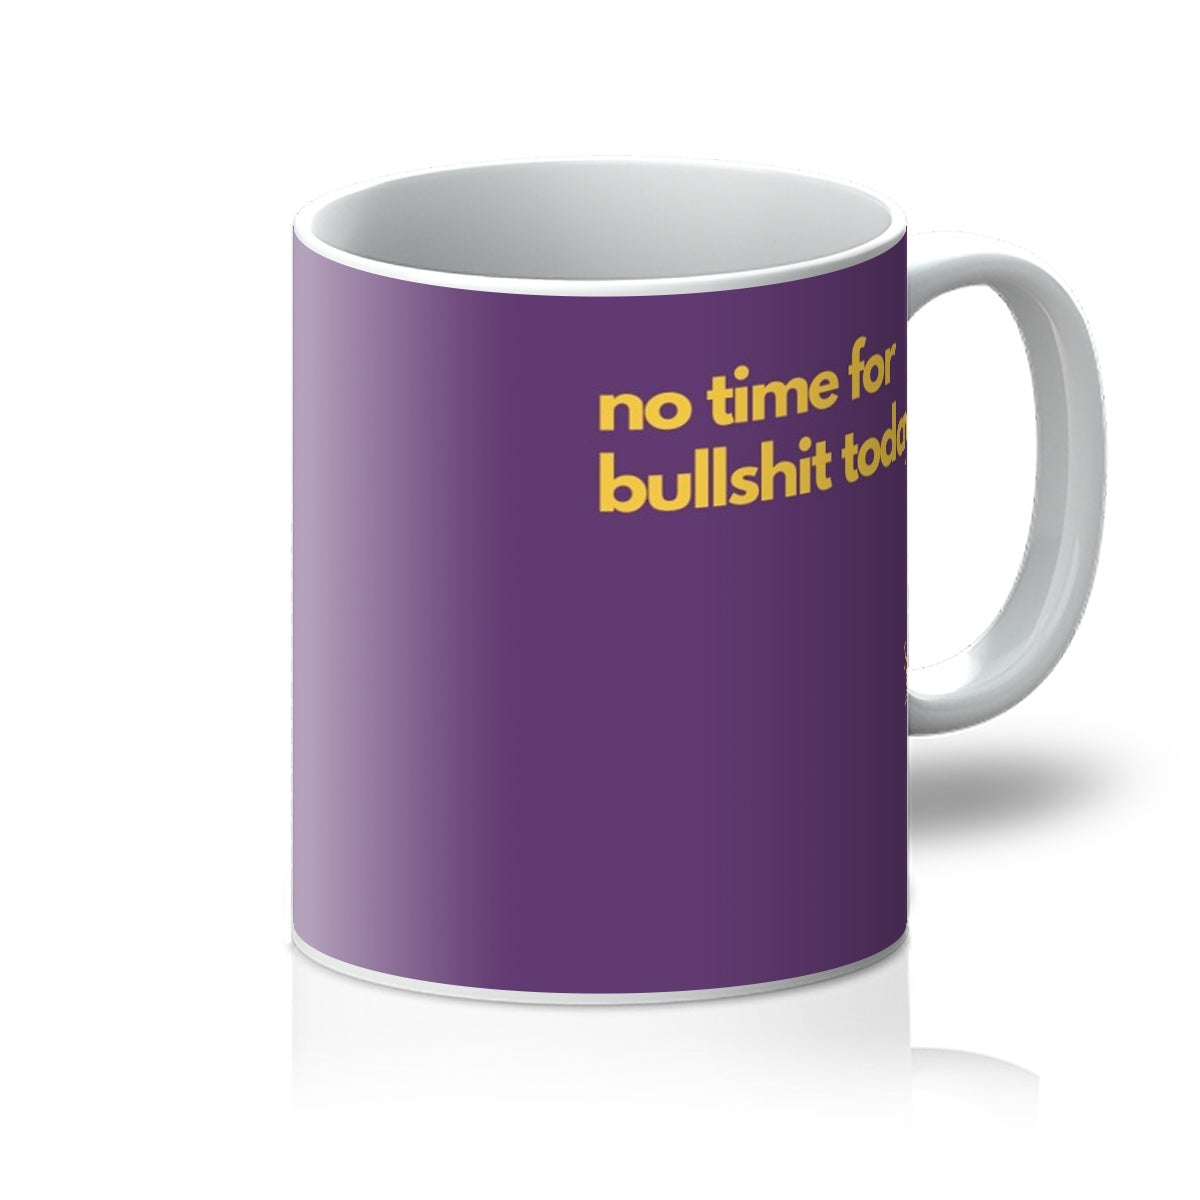 no time for bullshit today mug purple right